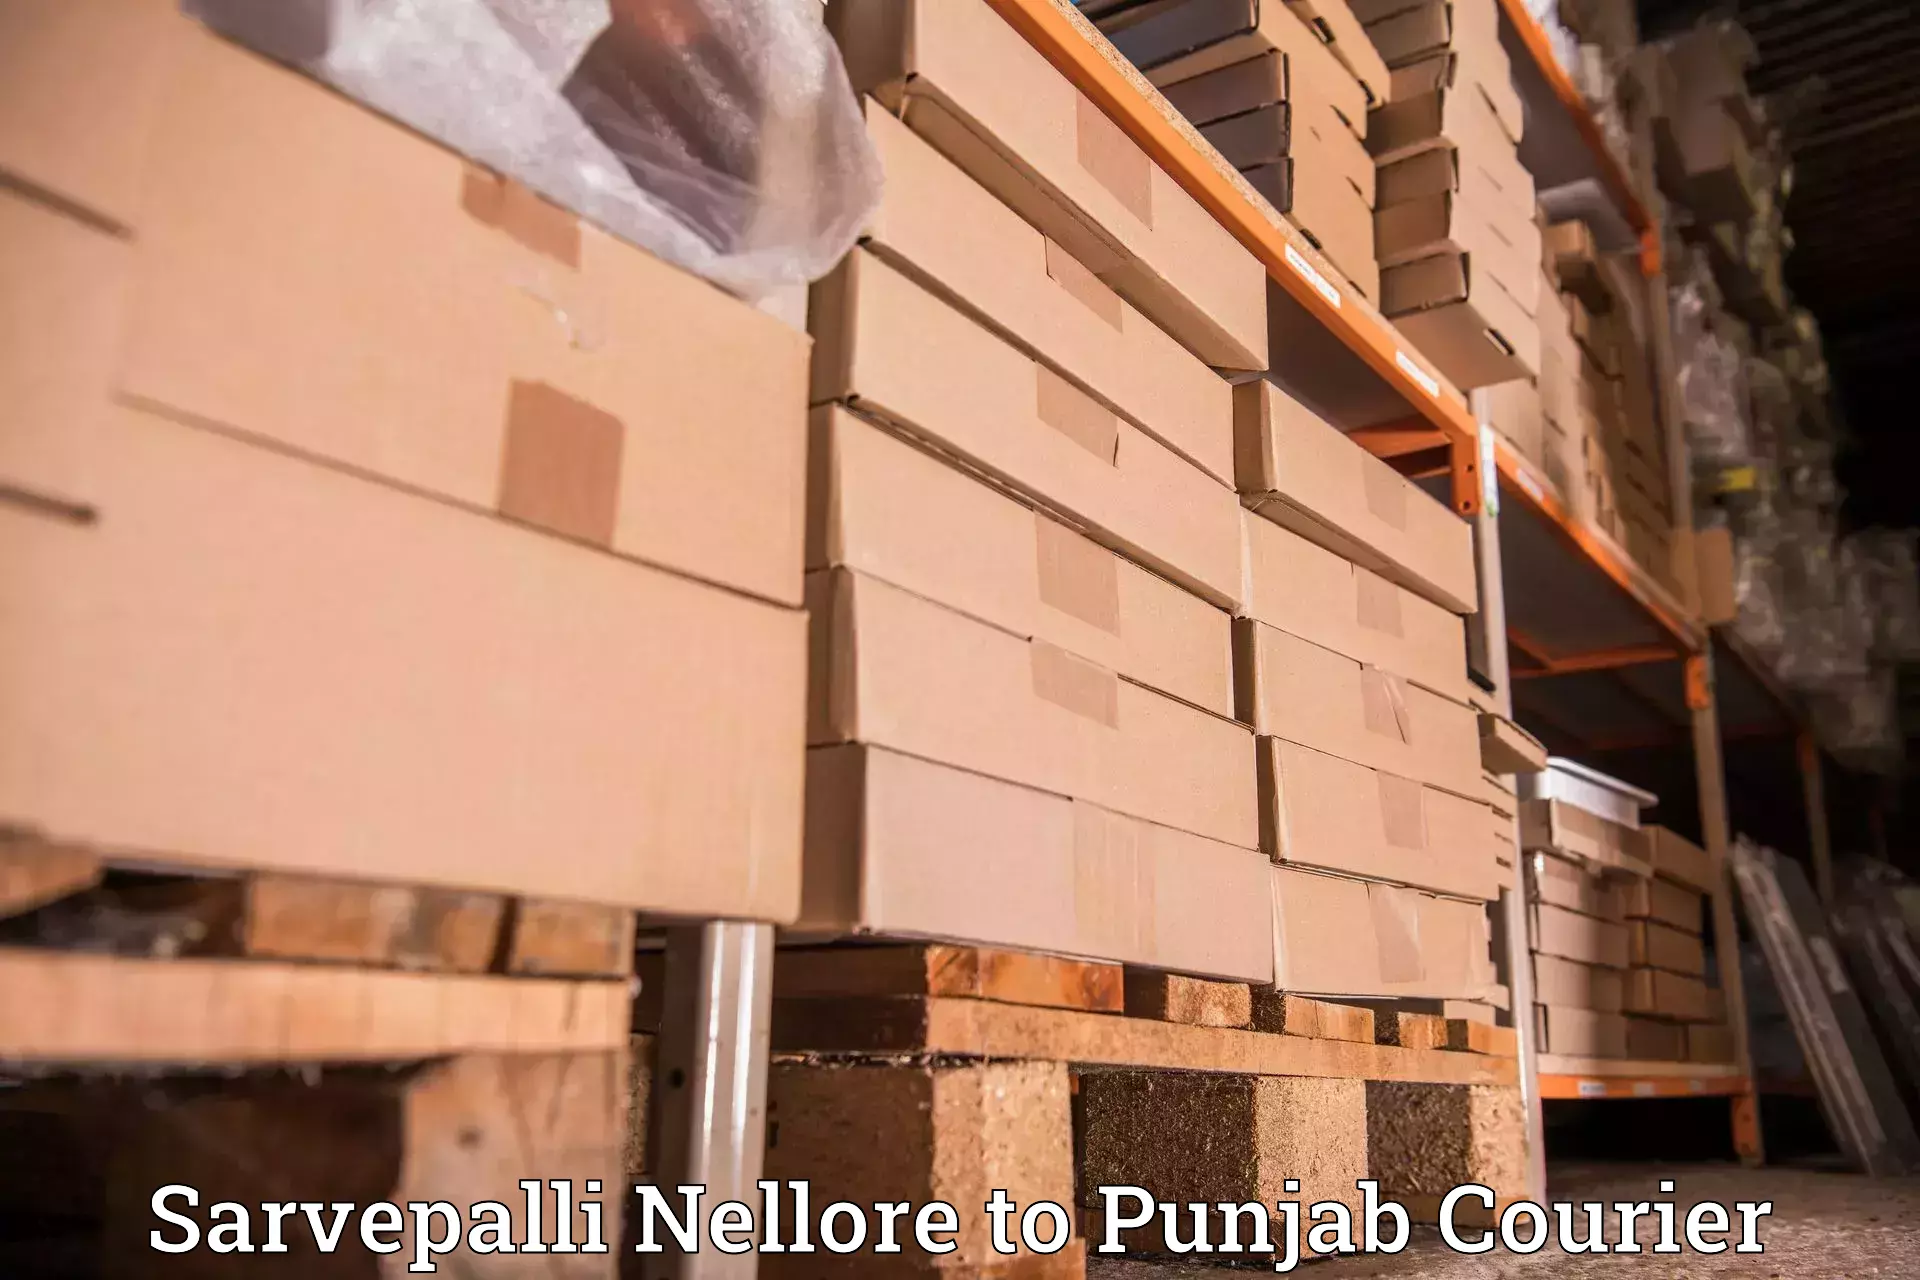 Seamless shipping service Sarvepalli Nellore to Punjab